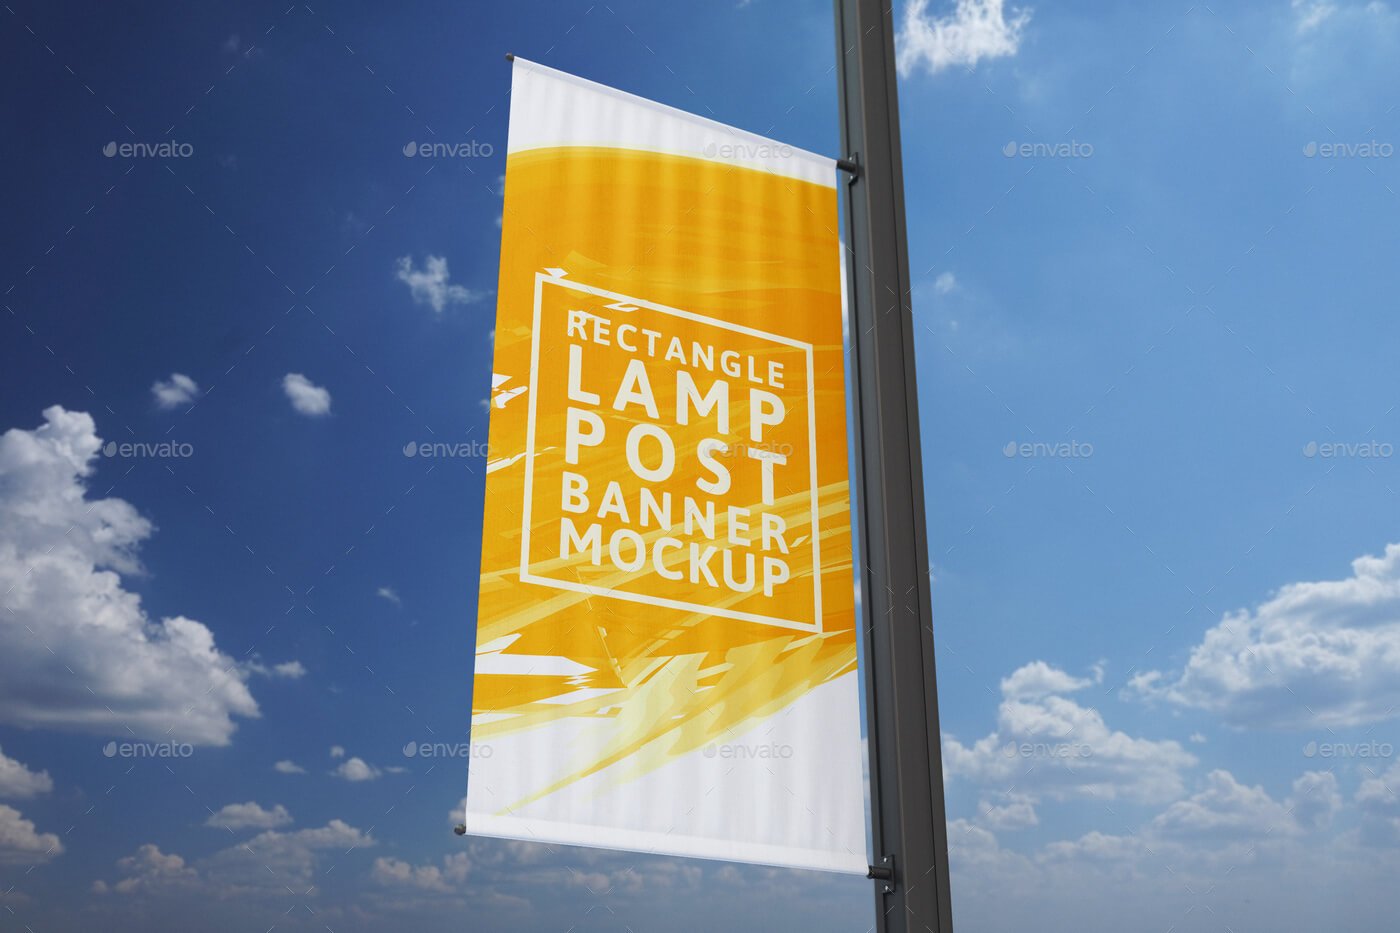 Rectangle Lamp Post Banner Mock-Up (1)